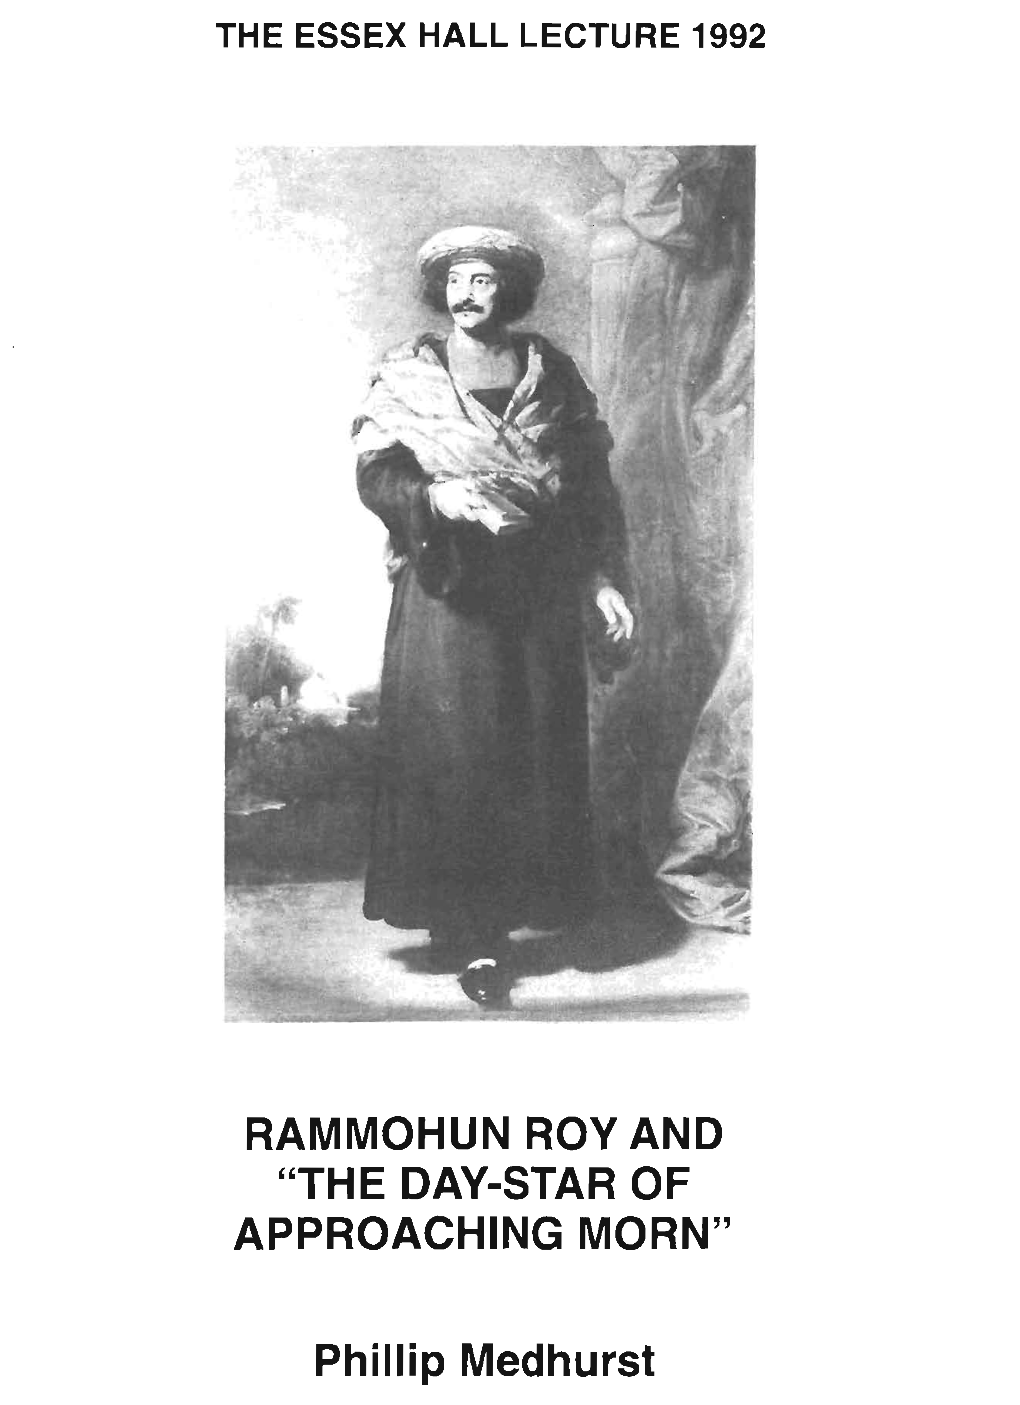 RAMMOHUN ROY and APPROACHING MORN" Lip Medhurs